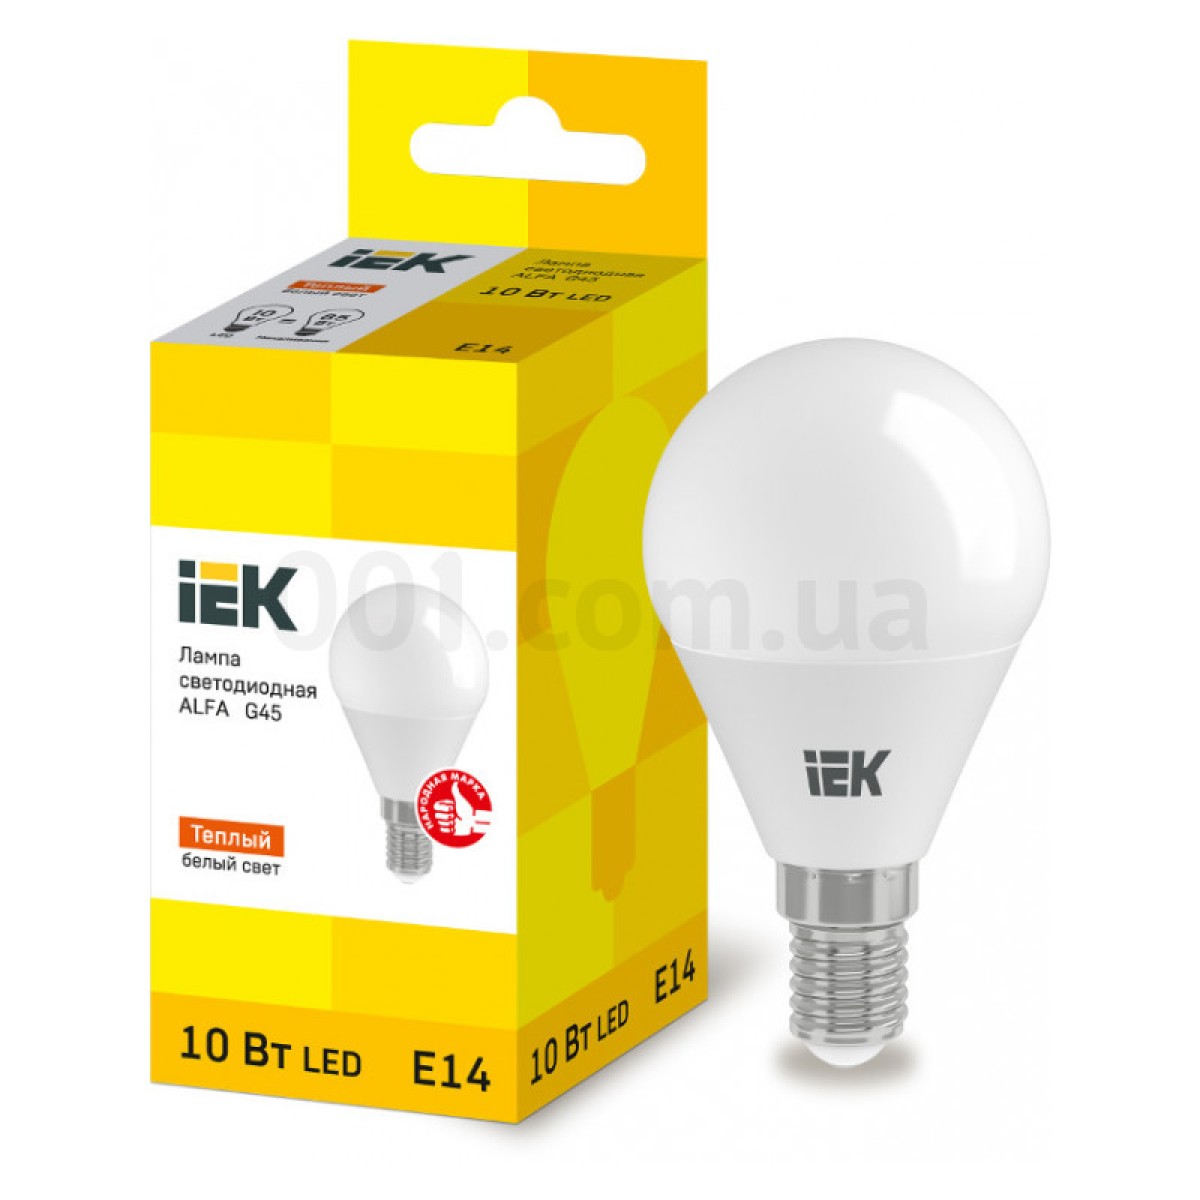 Светодиодная лампа LED ALFA G45 (шар) 10 Вт 230В 3000К E14, IEK 256_256.jpg